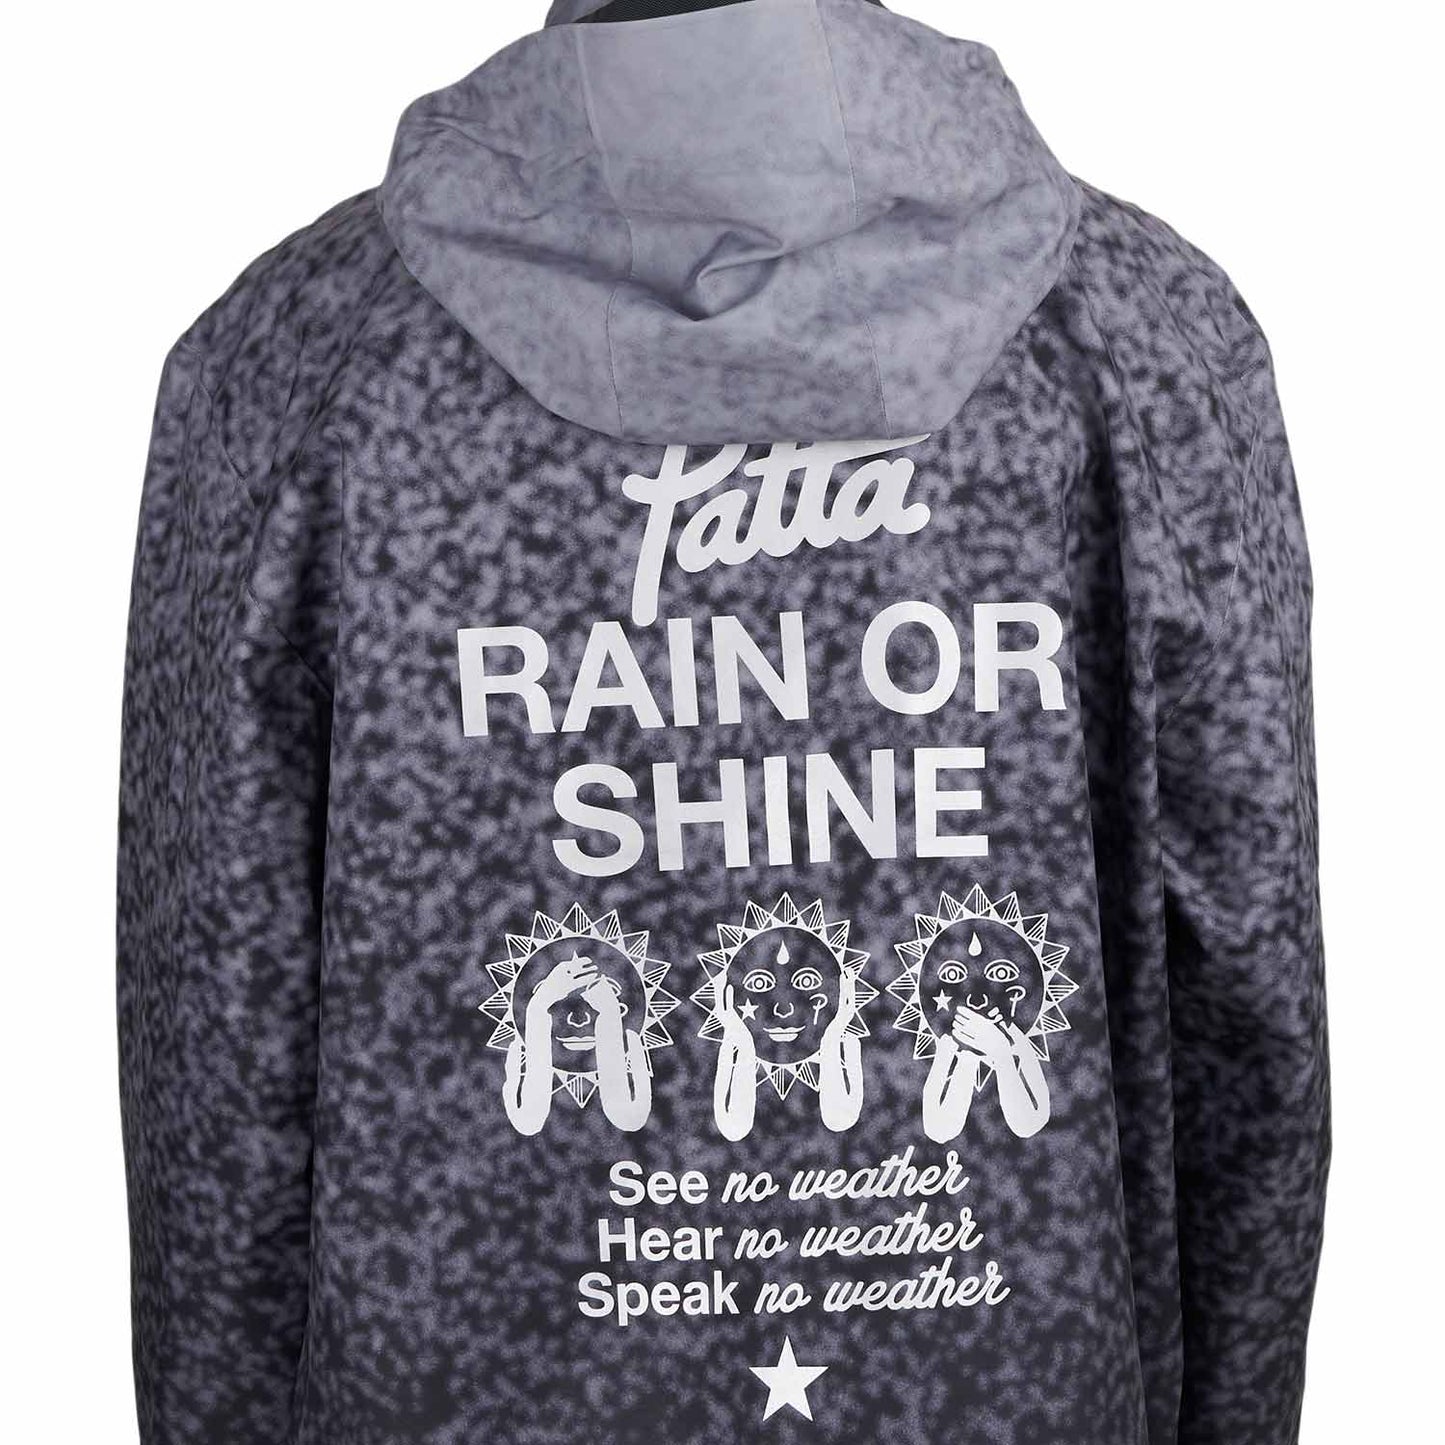 Converse x Patta Rain or Shine Jacket (Schwarz)  - Allike Store